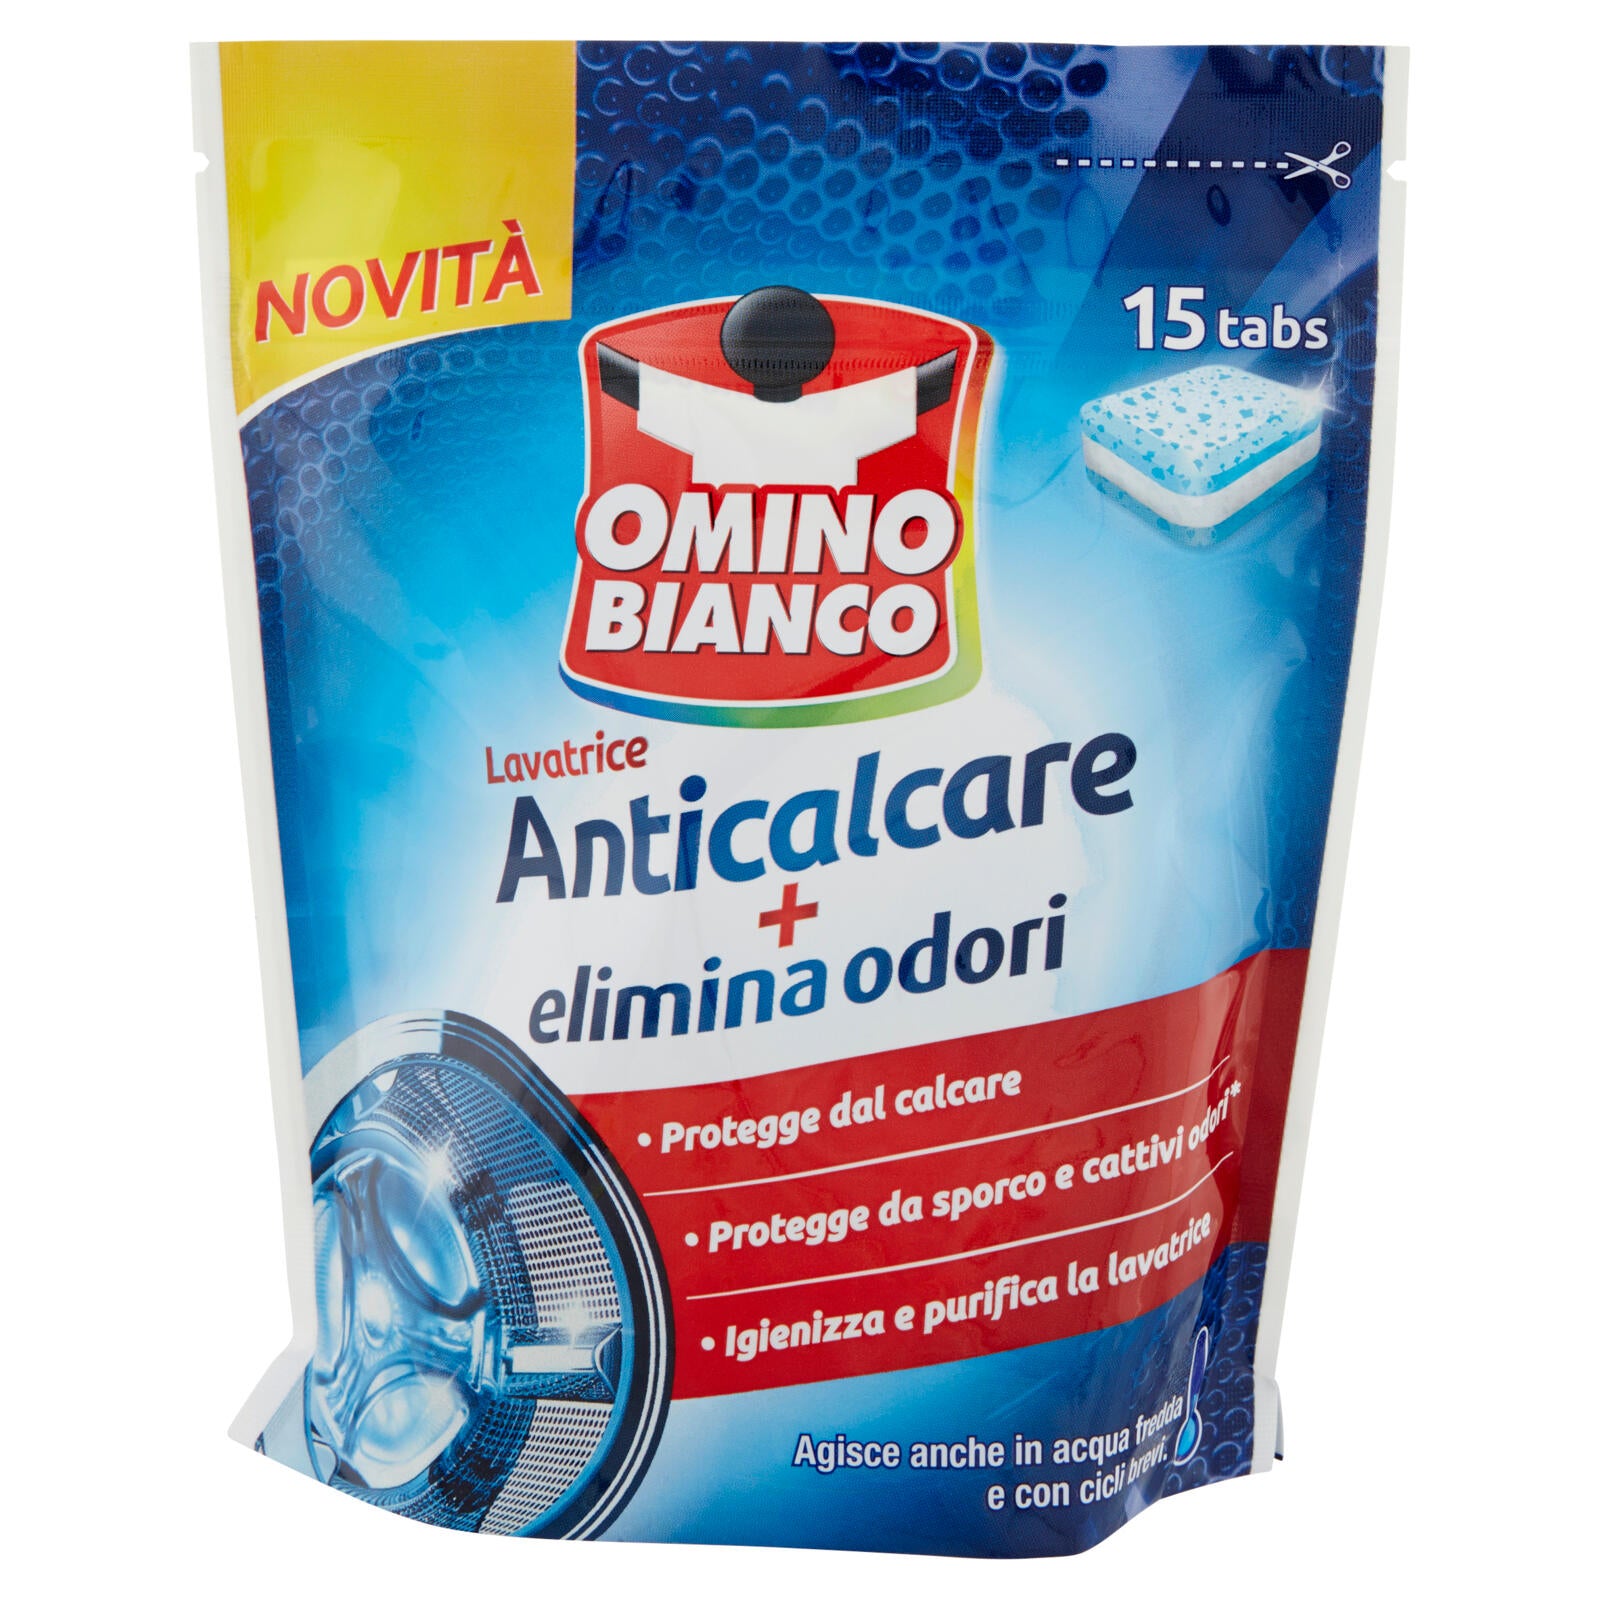 Omino Bianco Lavatrice Anticalcare + elimina odori 15 tabs 240 g